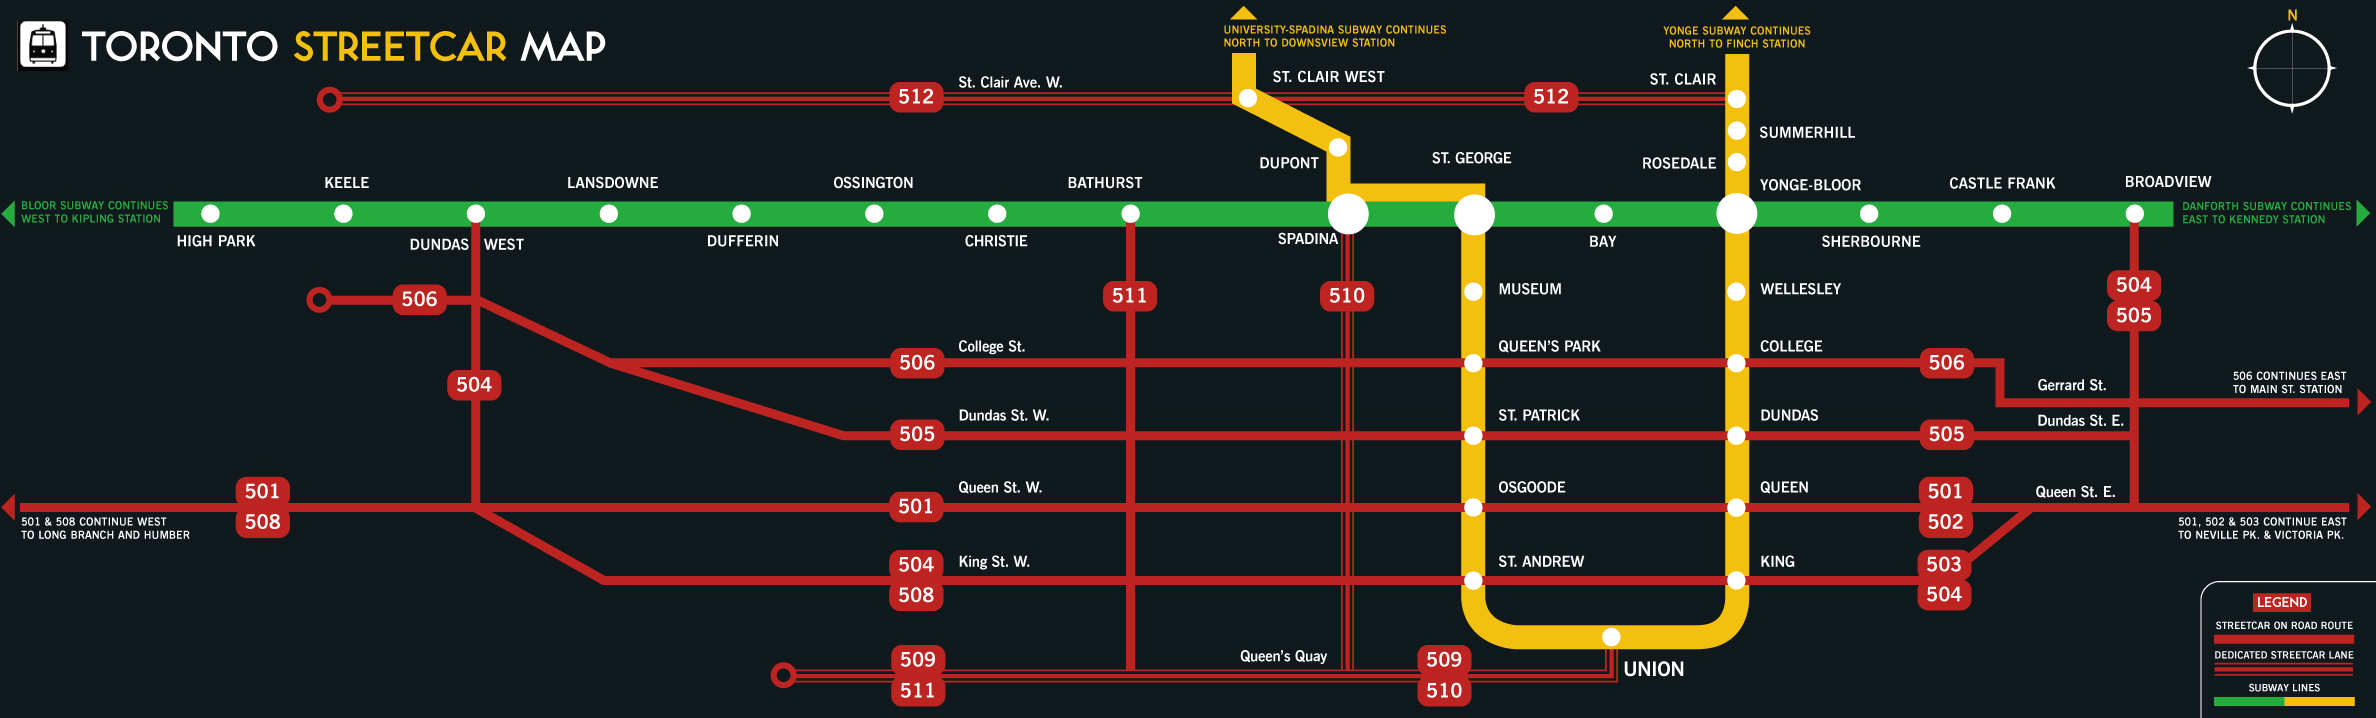 Streetcar Map For Toronto Spacing Toronto Spacing Toronto